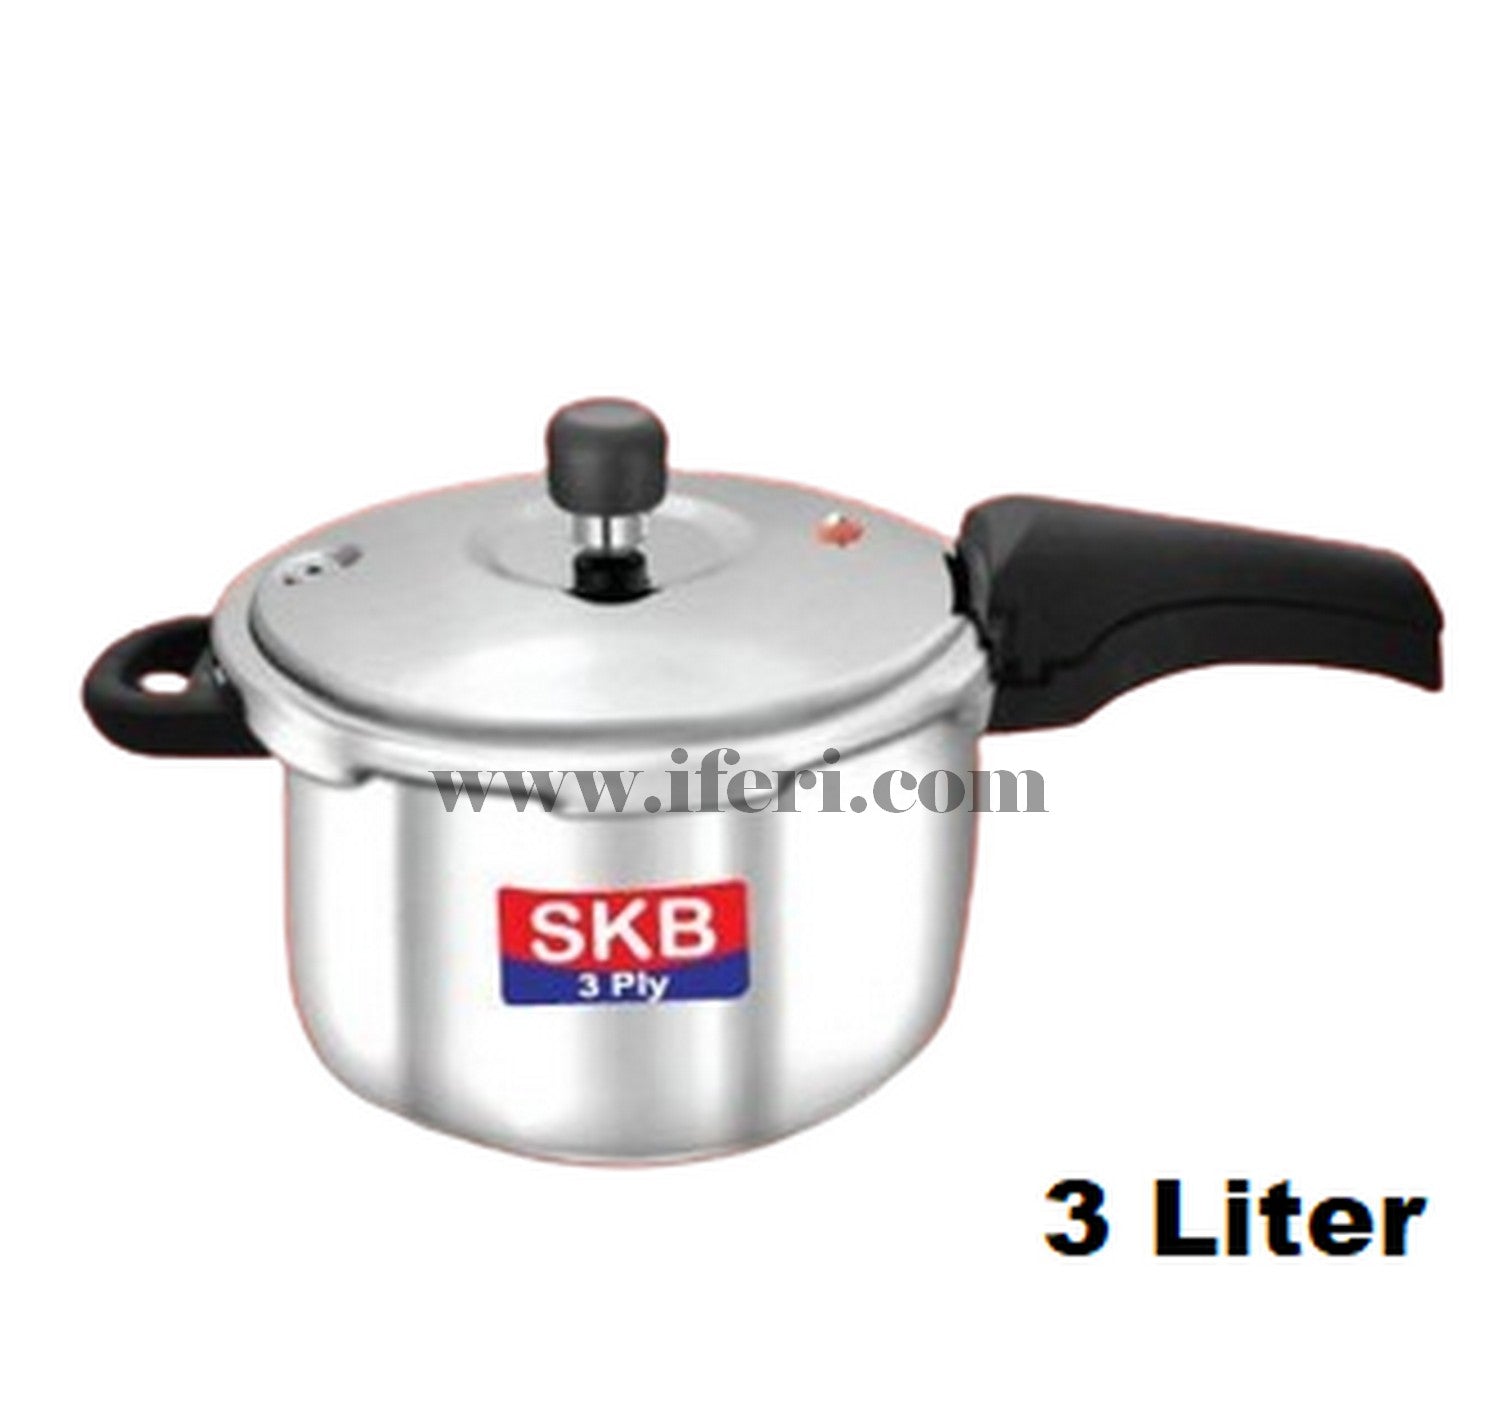 SKB 3 Liter Stainless Steel 3 ply Pressure Cooker SKB2221